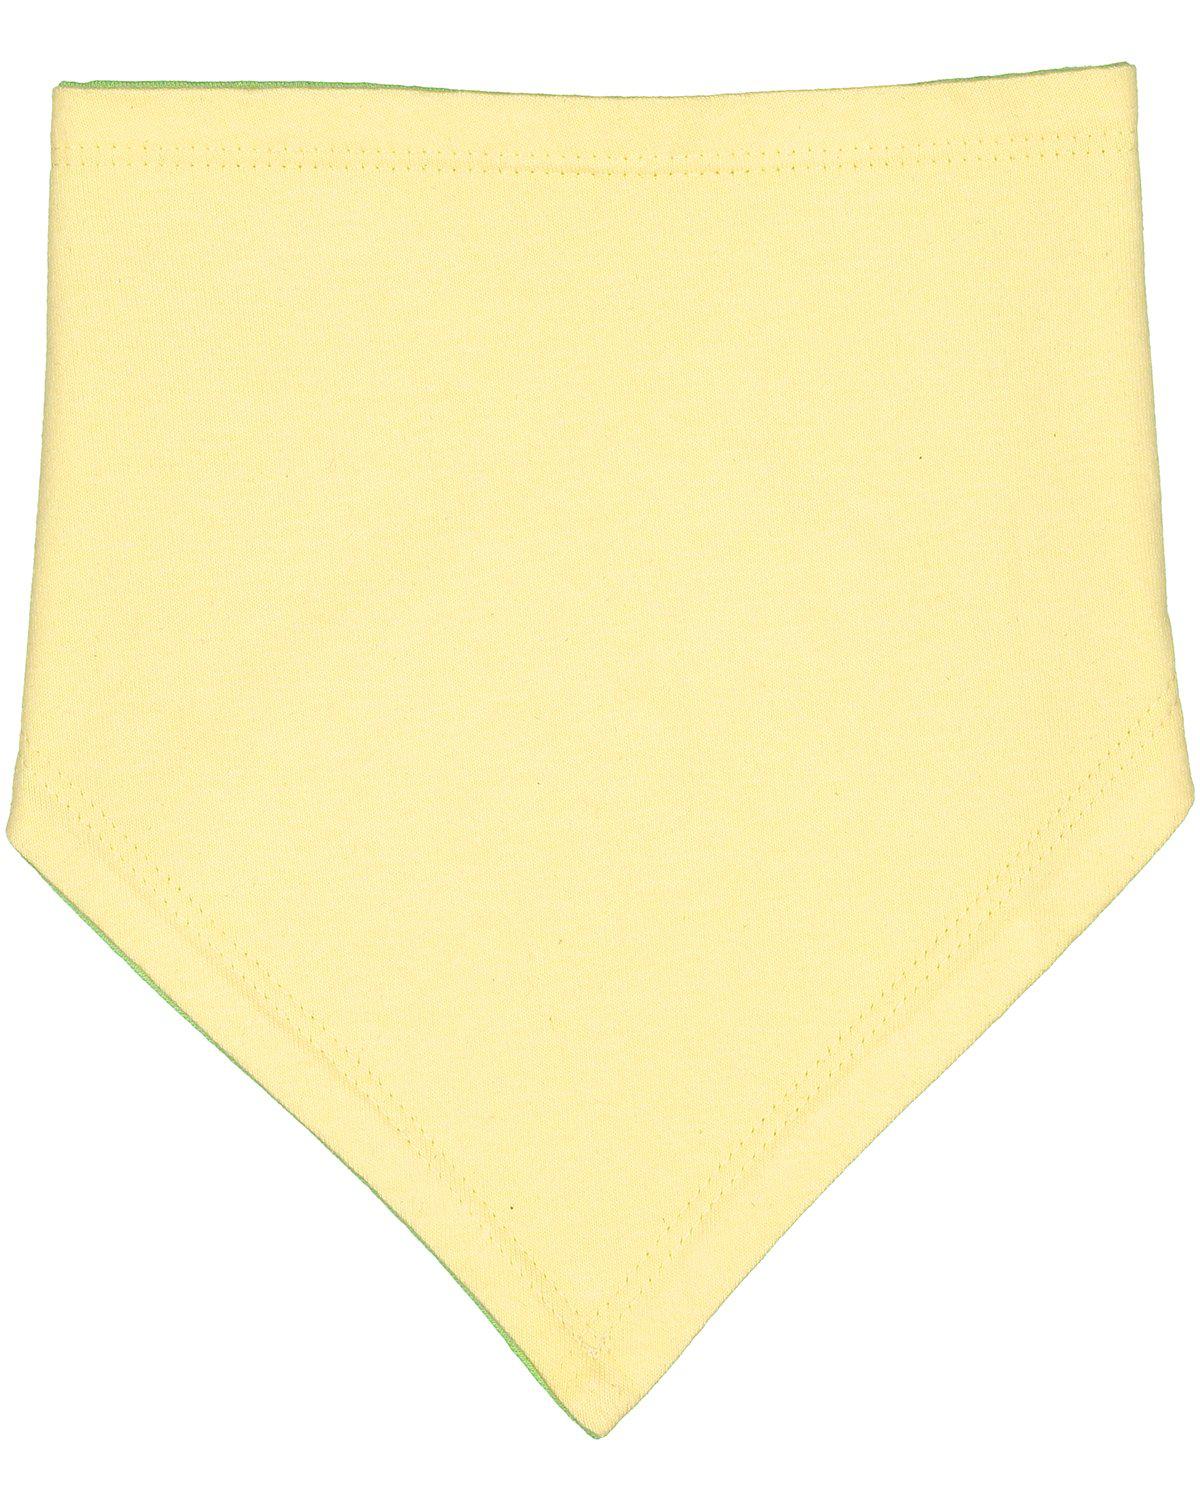 Banana/KeyLime - 100% Cotton Bandana Baby Bibs-Design Blanks